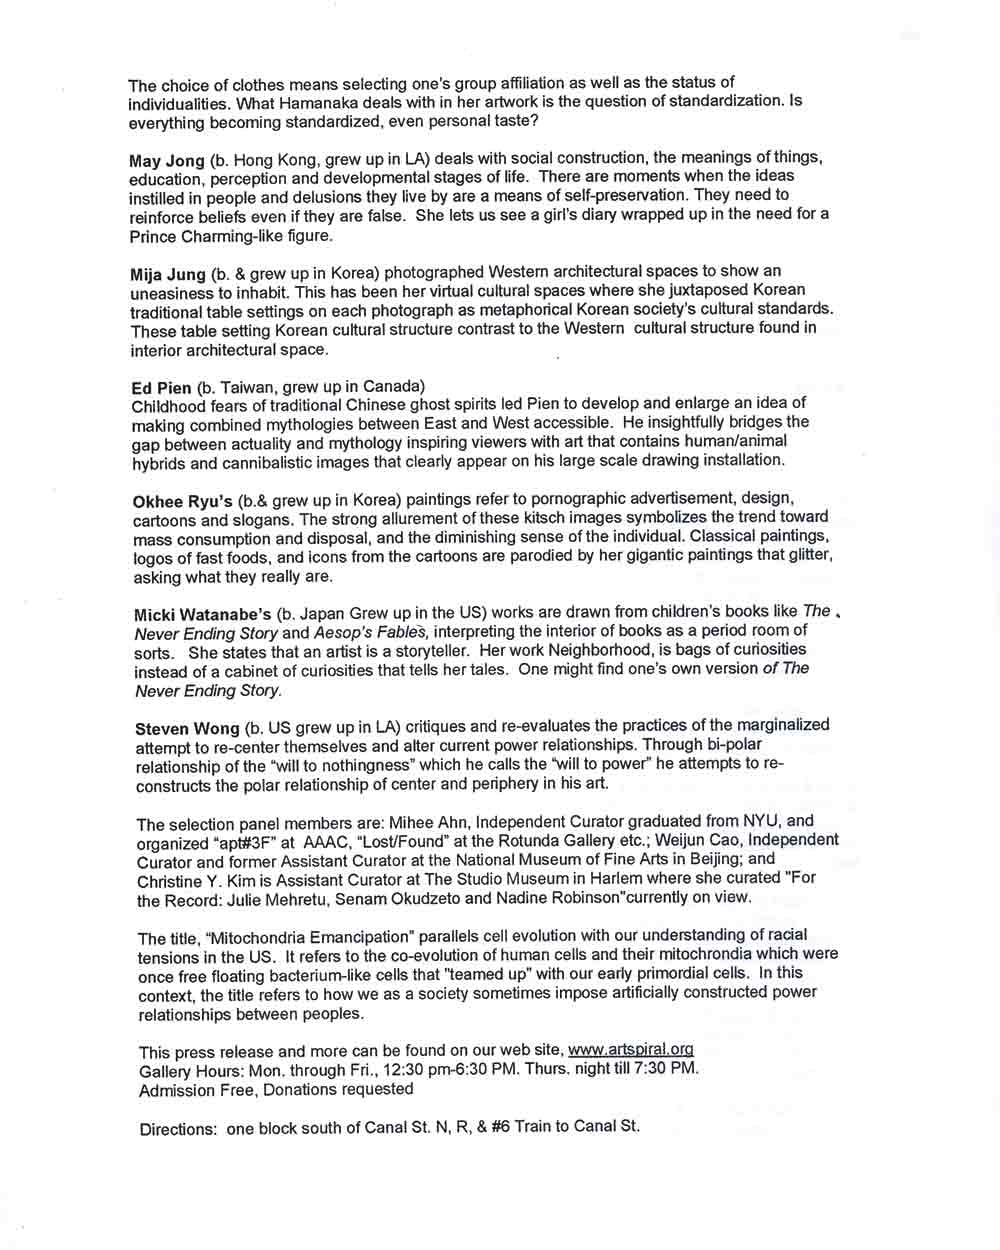 Mitochondria Emancipation press release, pg 2